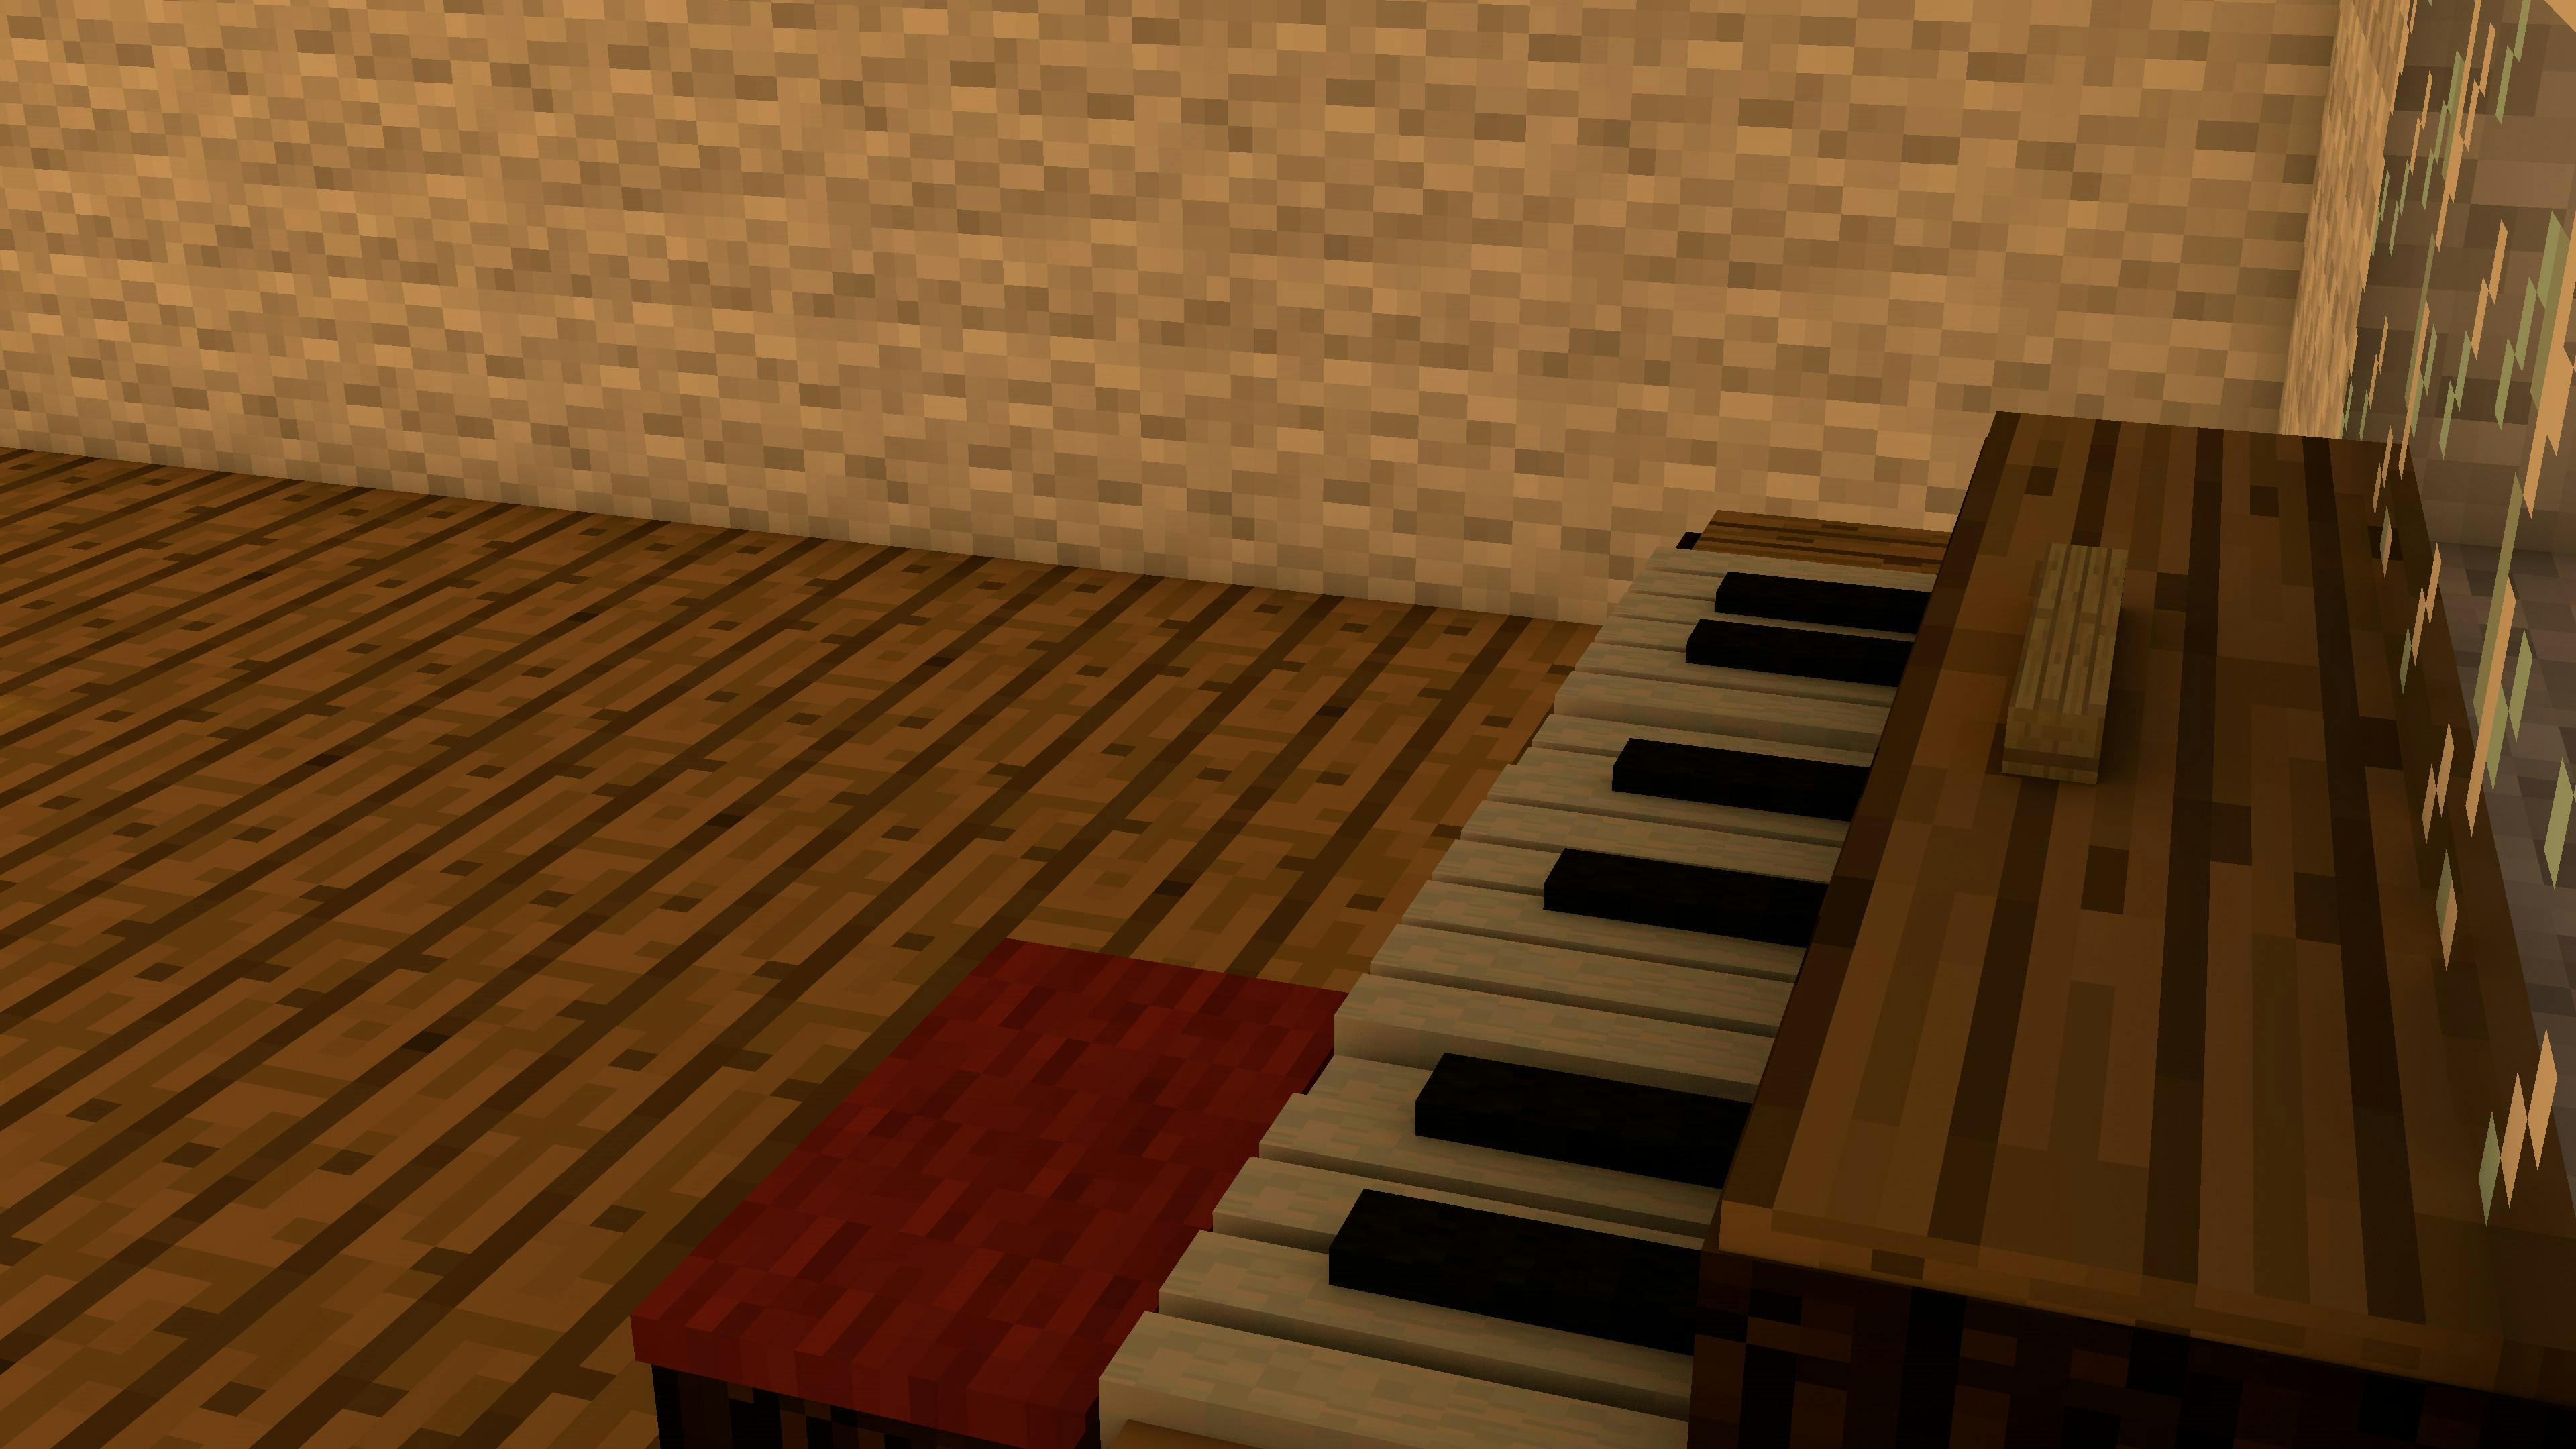 Pianist!